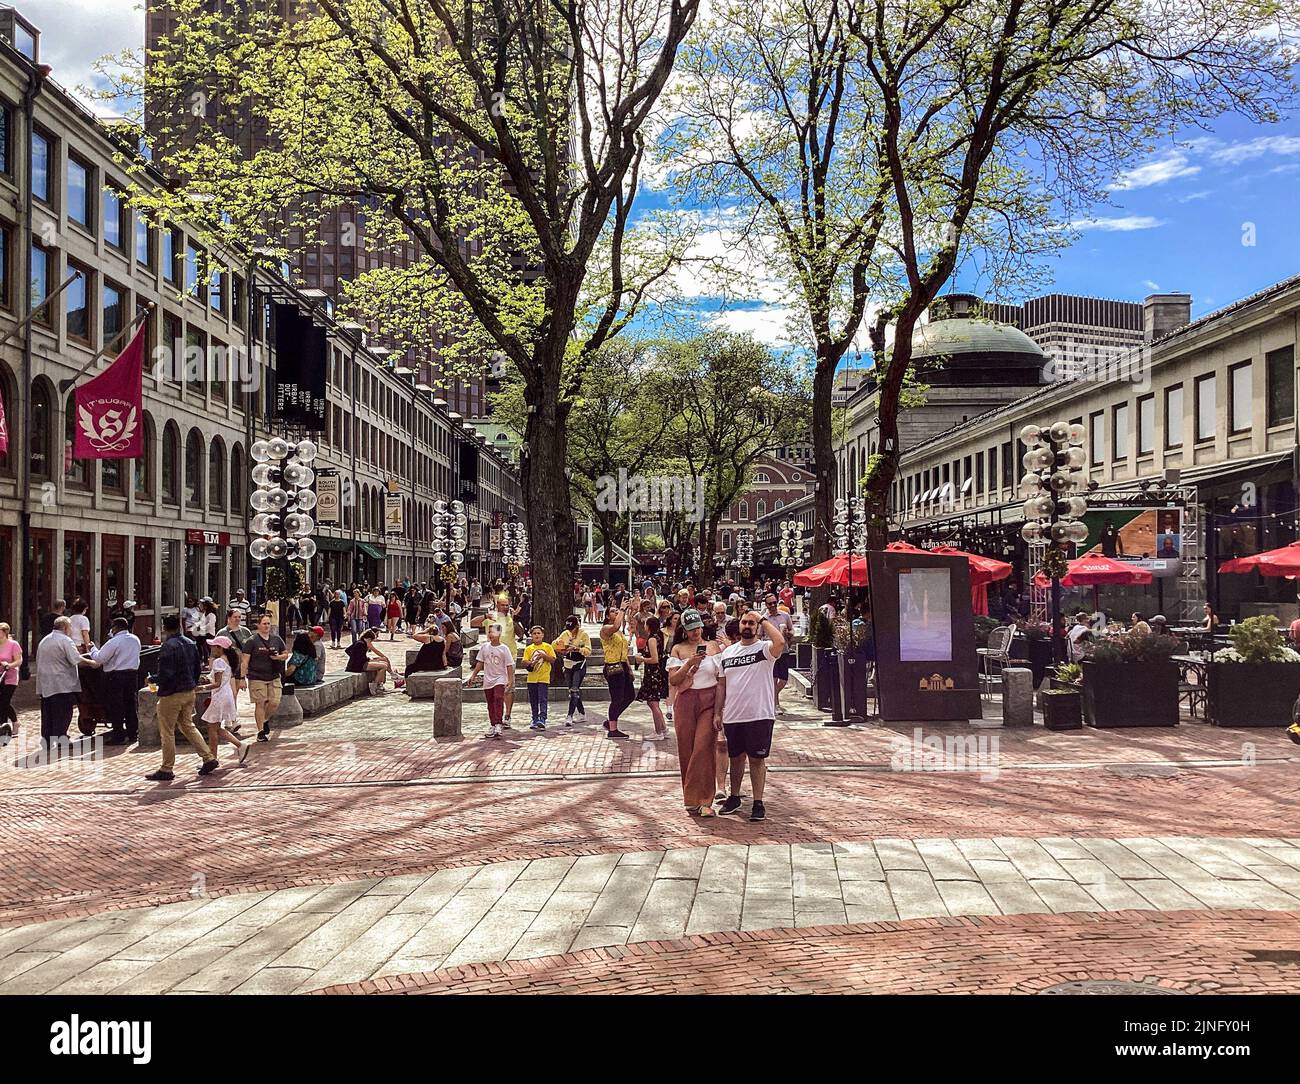 Quincy Market building and outdoor plaza, Boston, Massachusetts Stock Photo